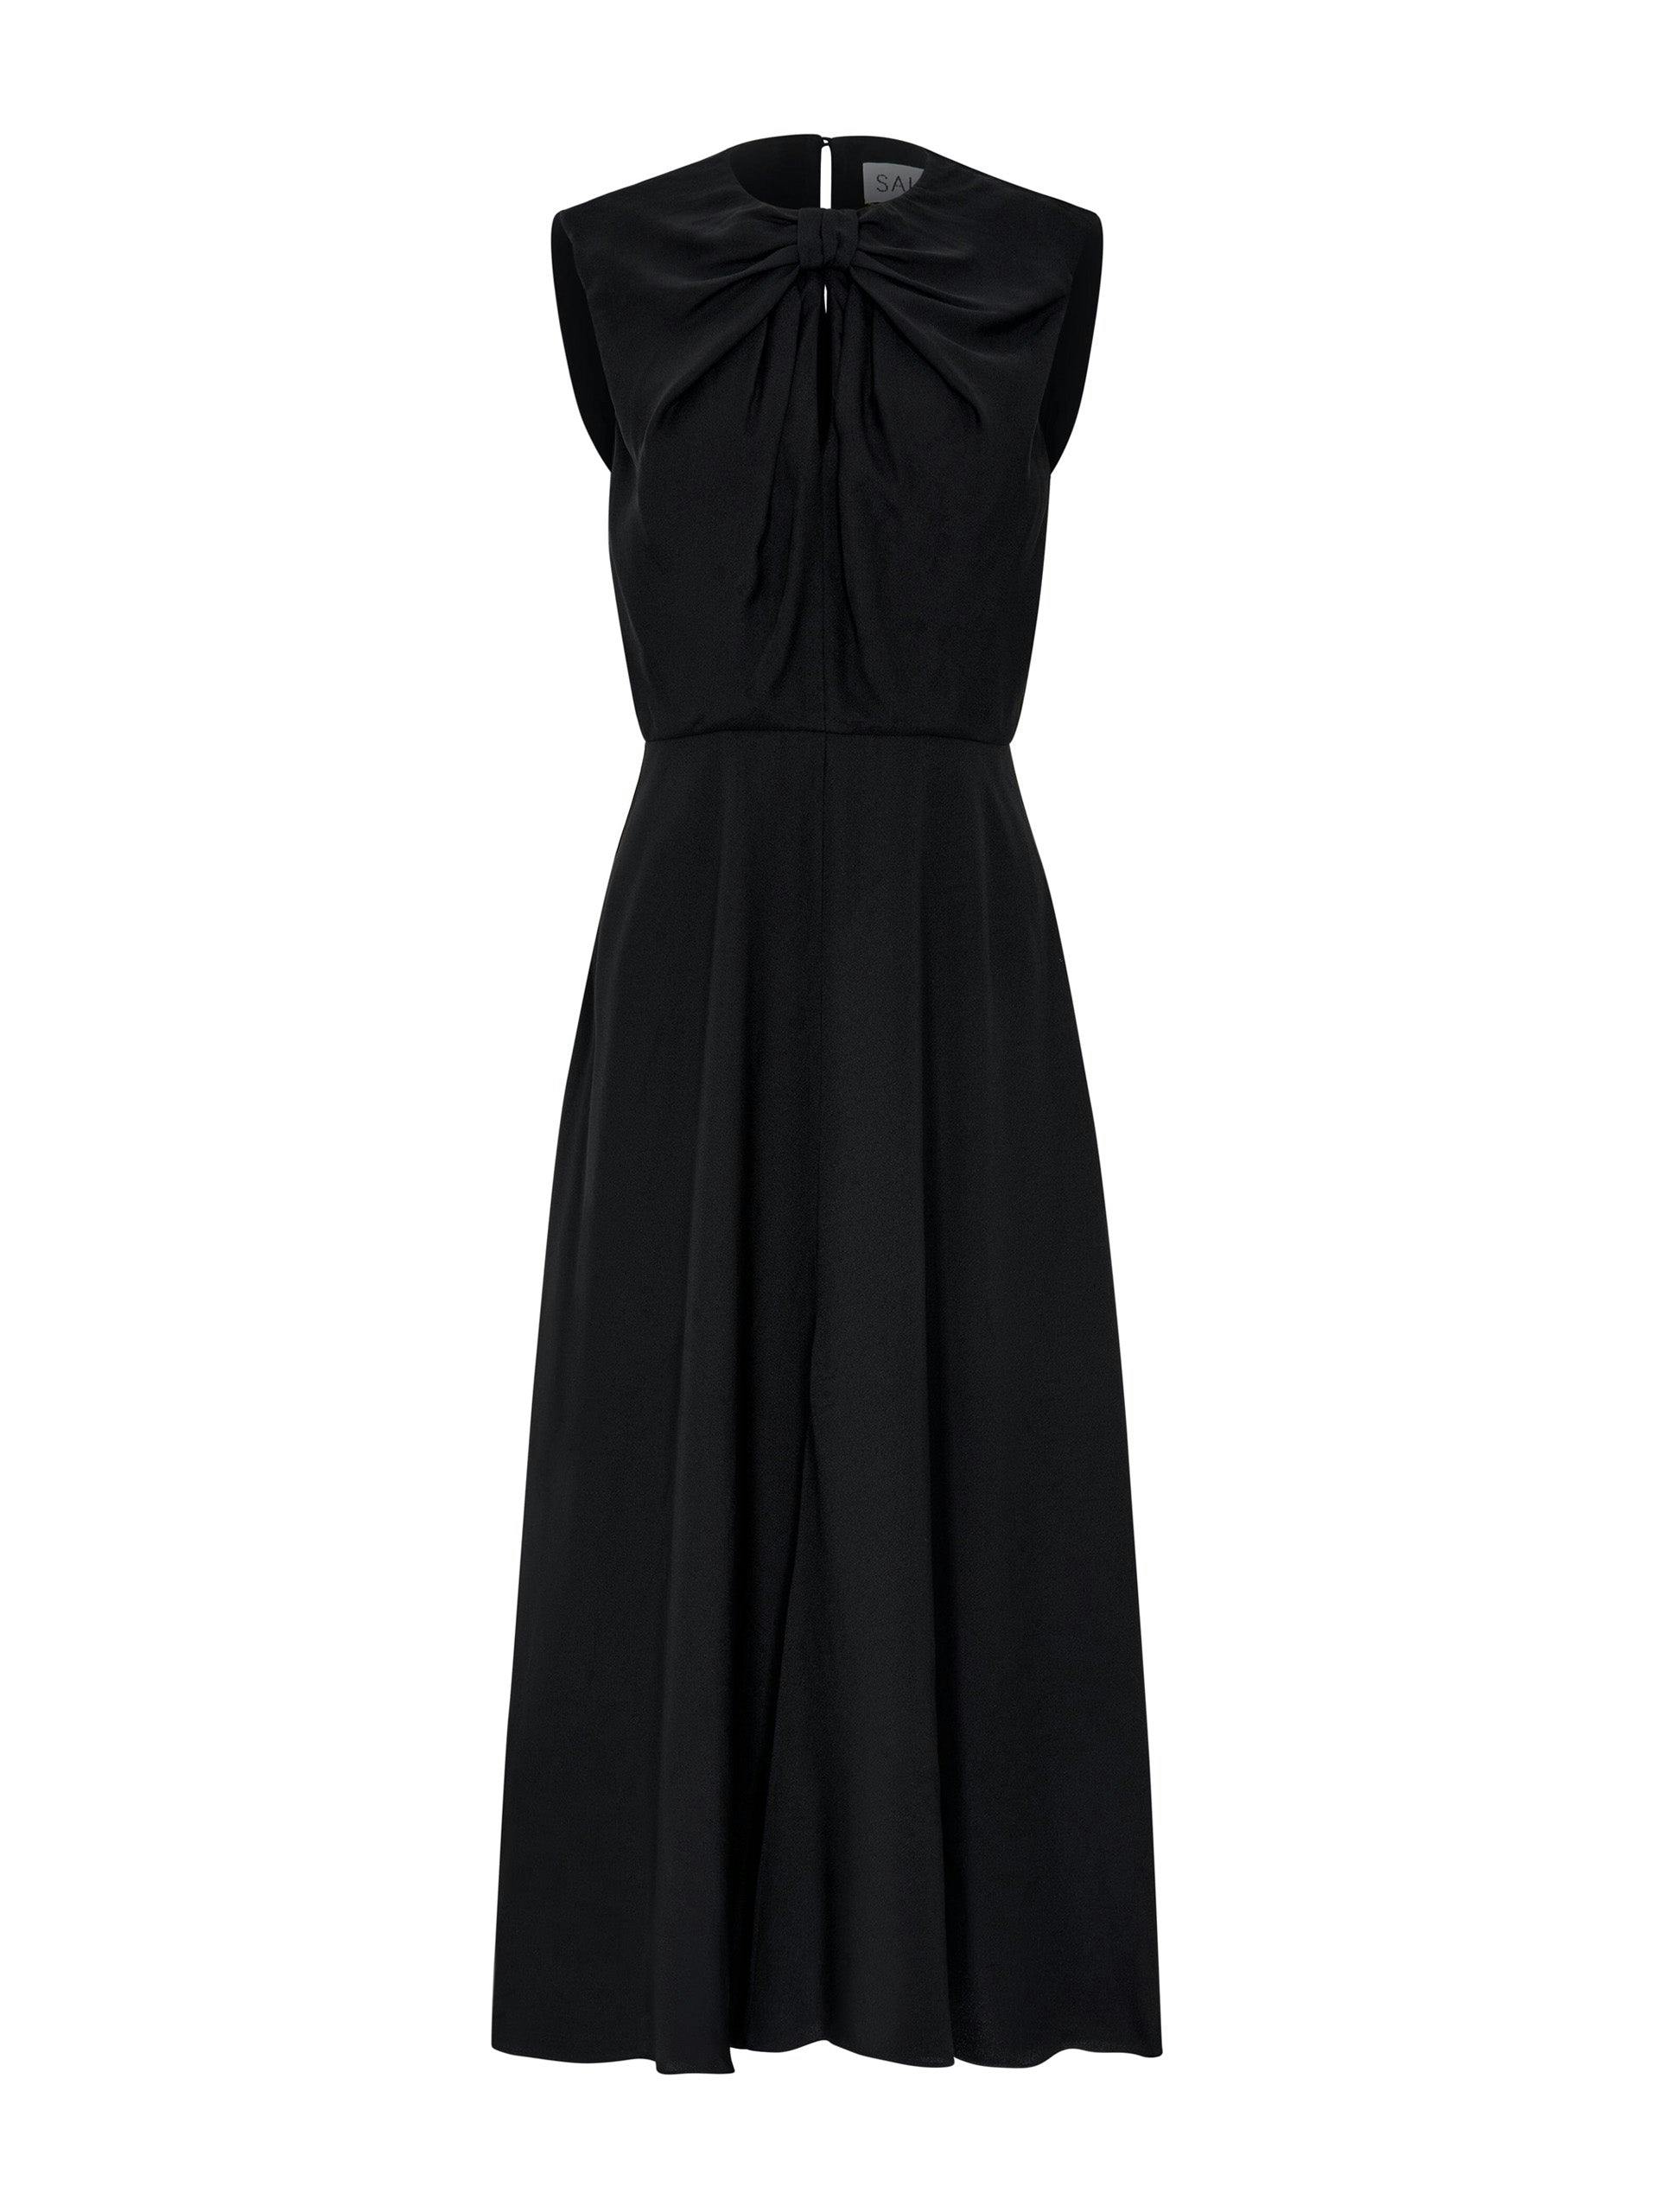 Black Marla dress